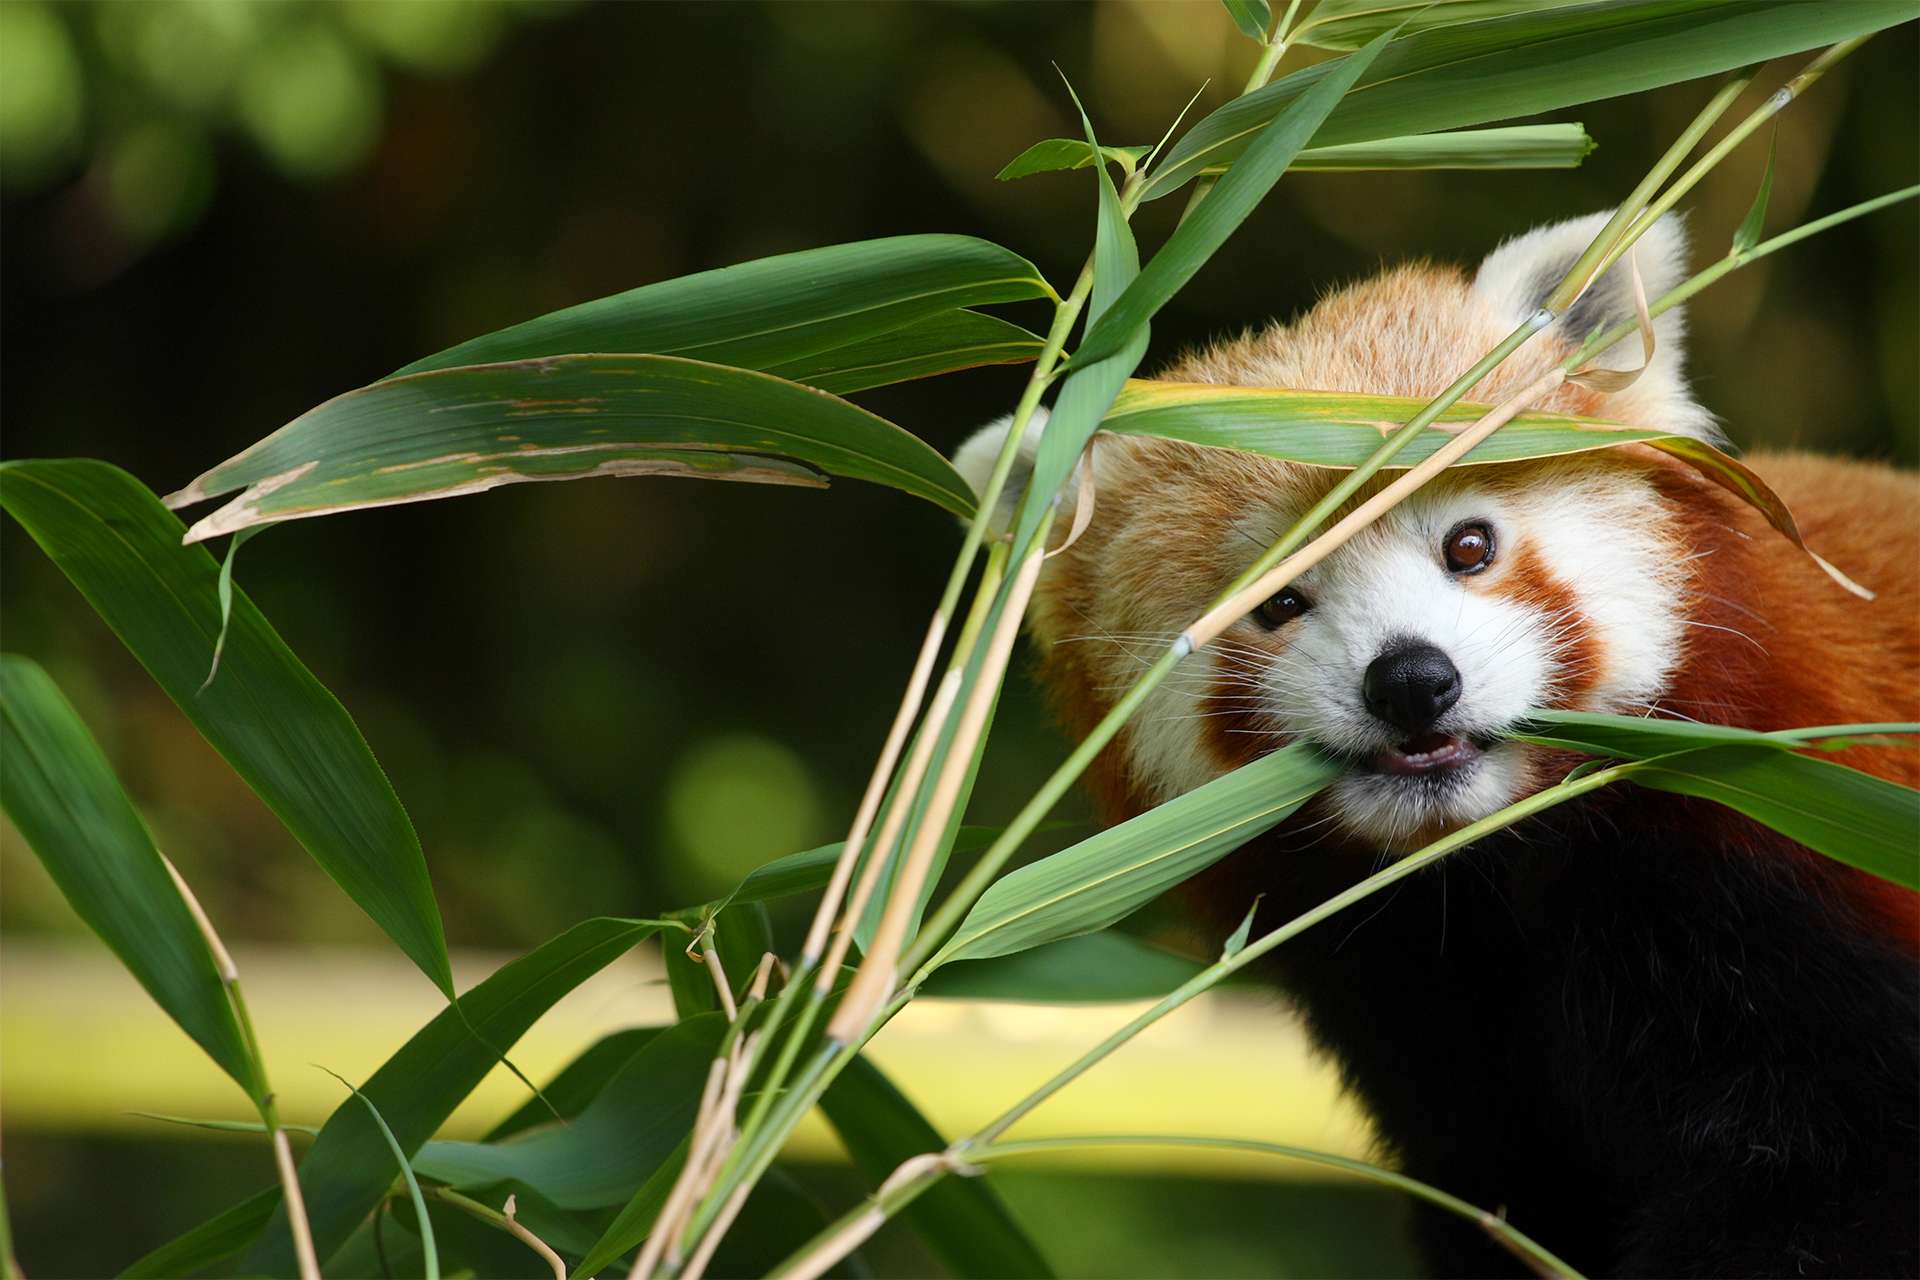 Adorable Red panda eating bamboo